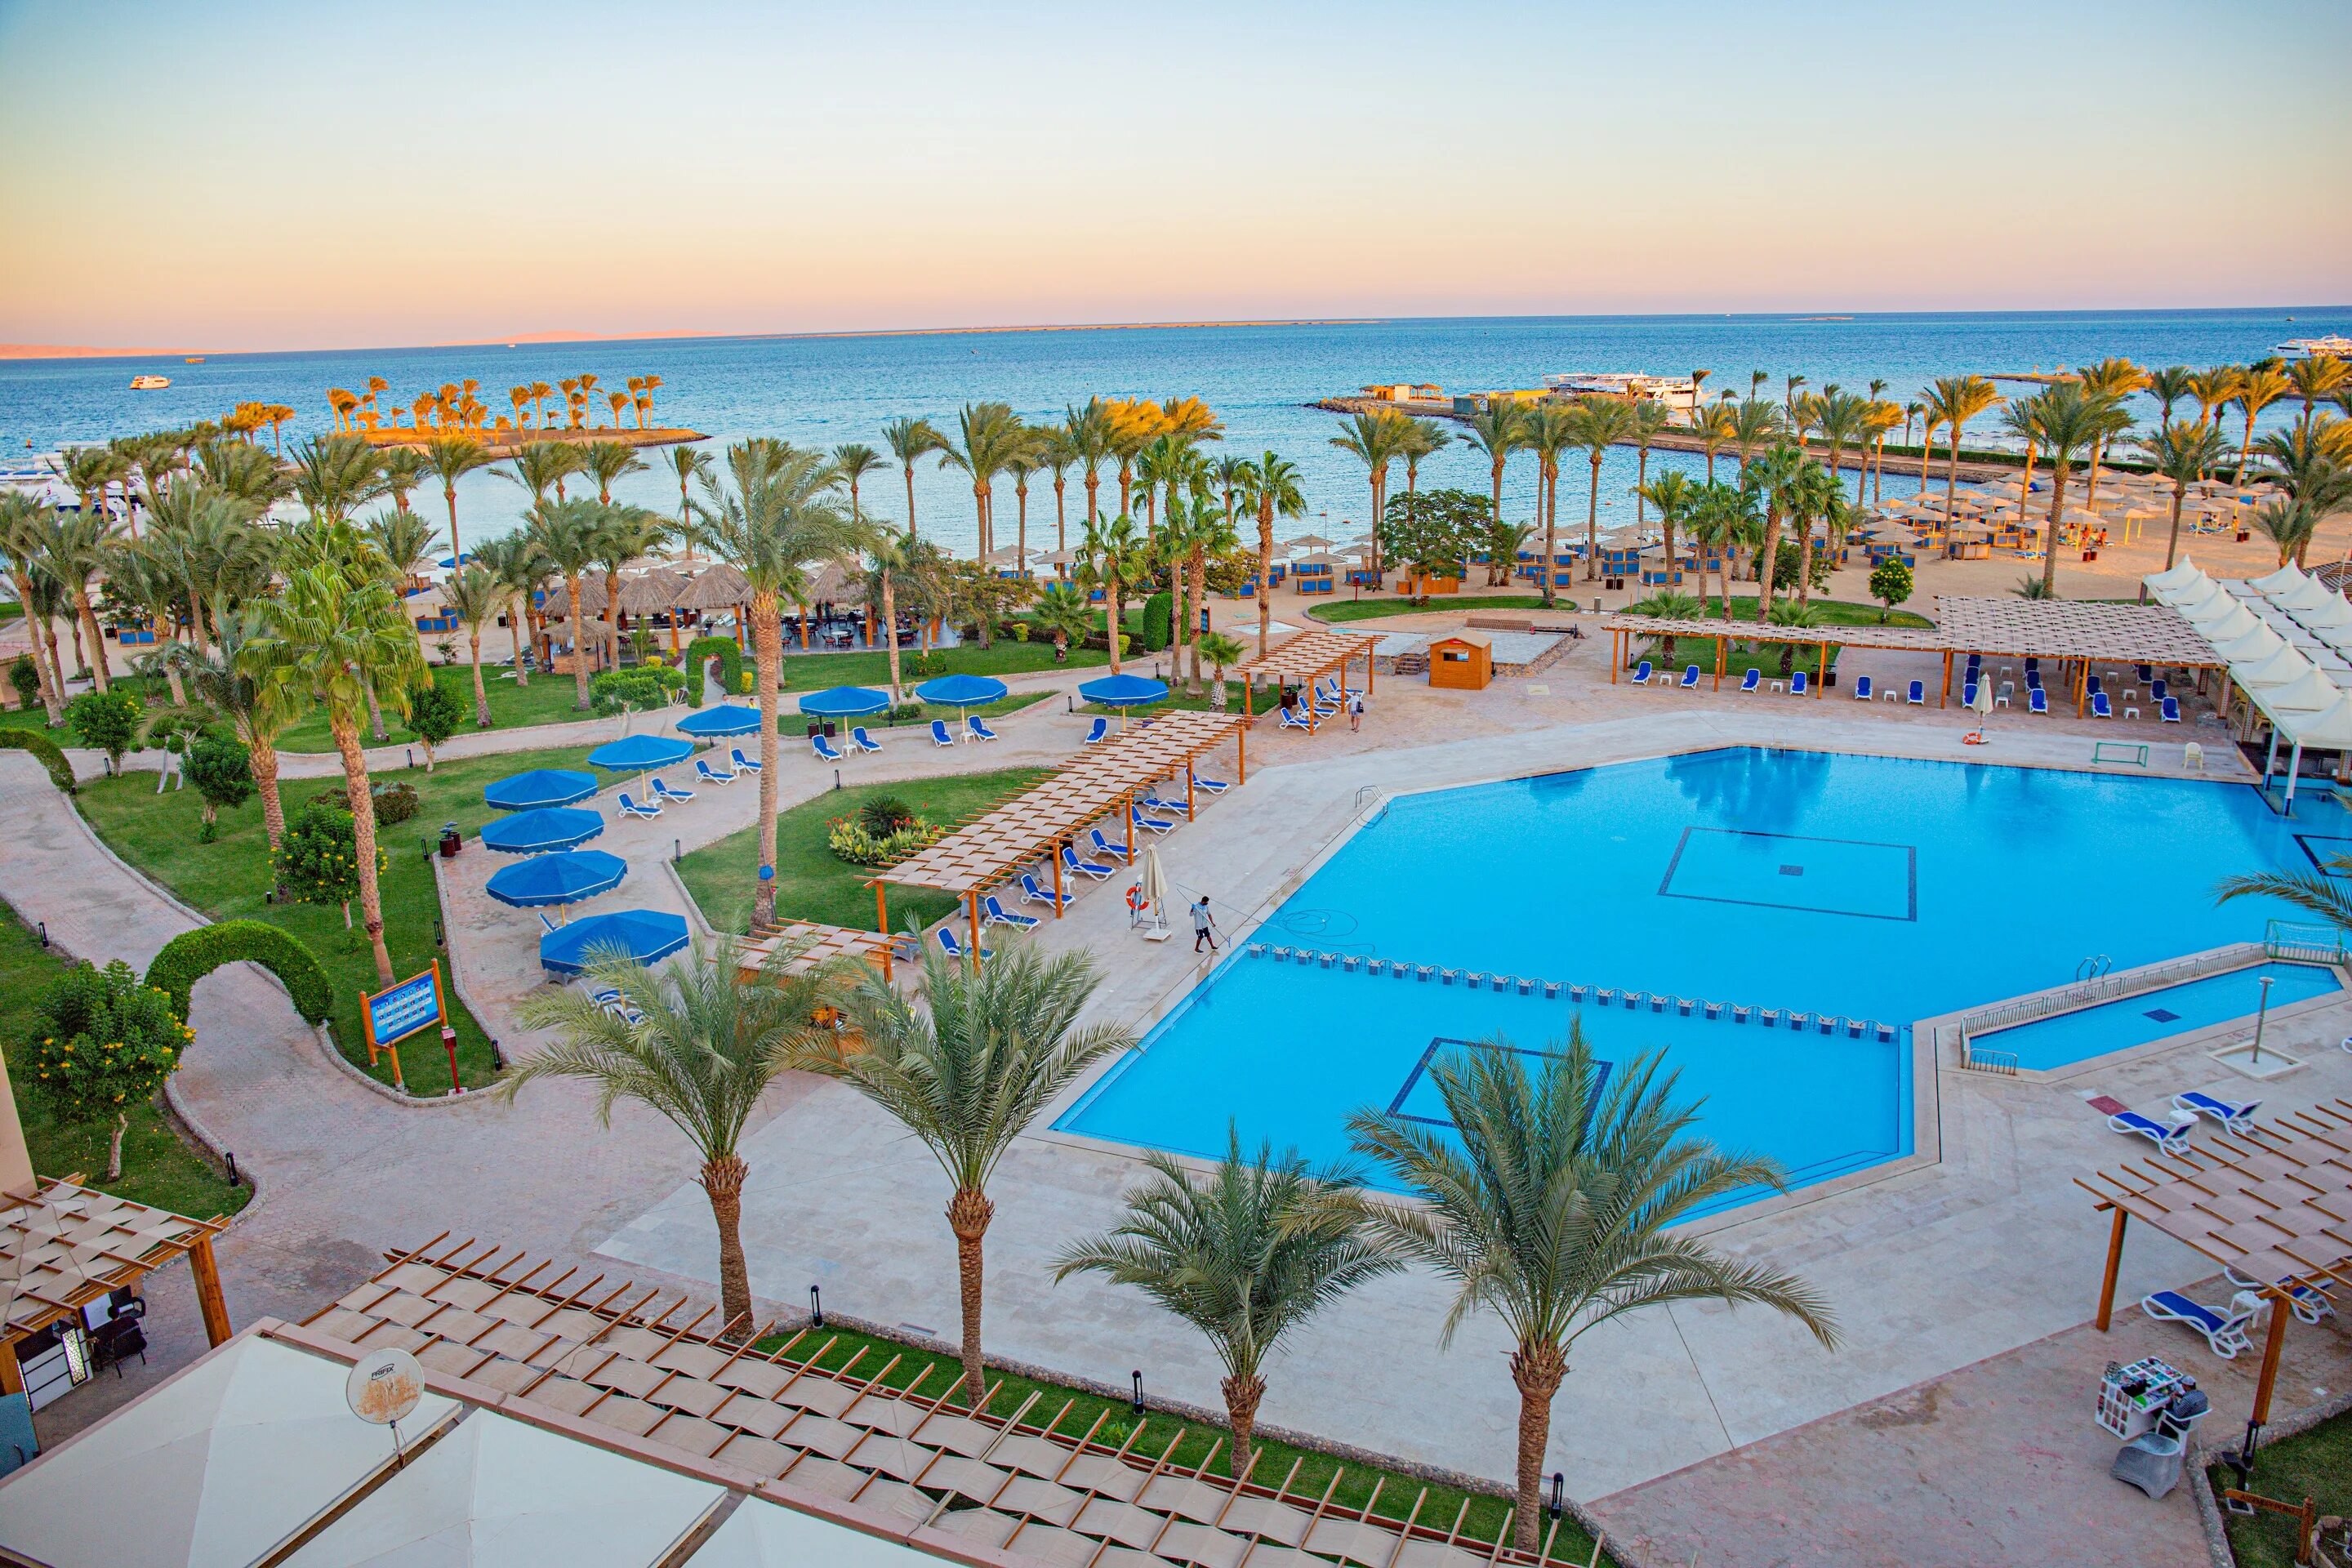 Continental hurghada. Continental Hotel Hurghada 5. Отель Континенталь Хургада 5 звезд все включено. Солнечный Египет. Голден Файв Хургада.